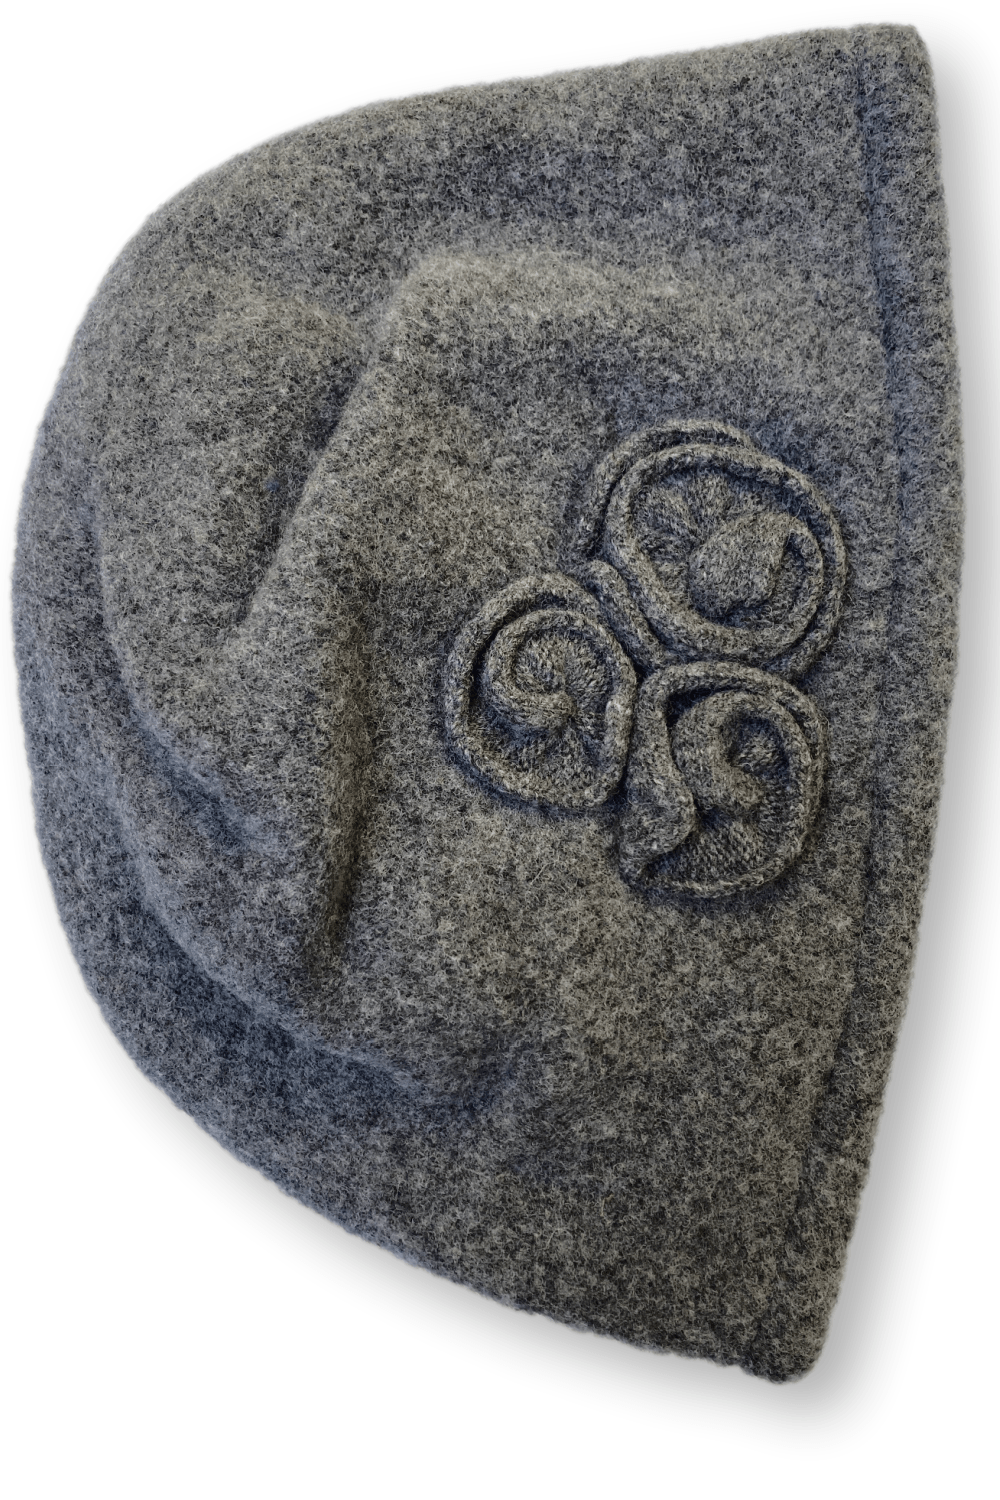 Women's merino wool snug fit hat with 3 decorative side flowers. Hat is grey.